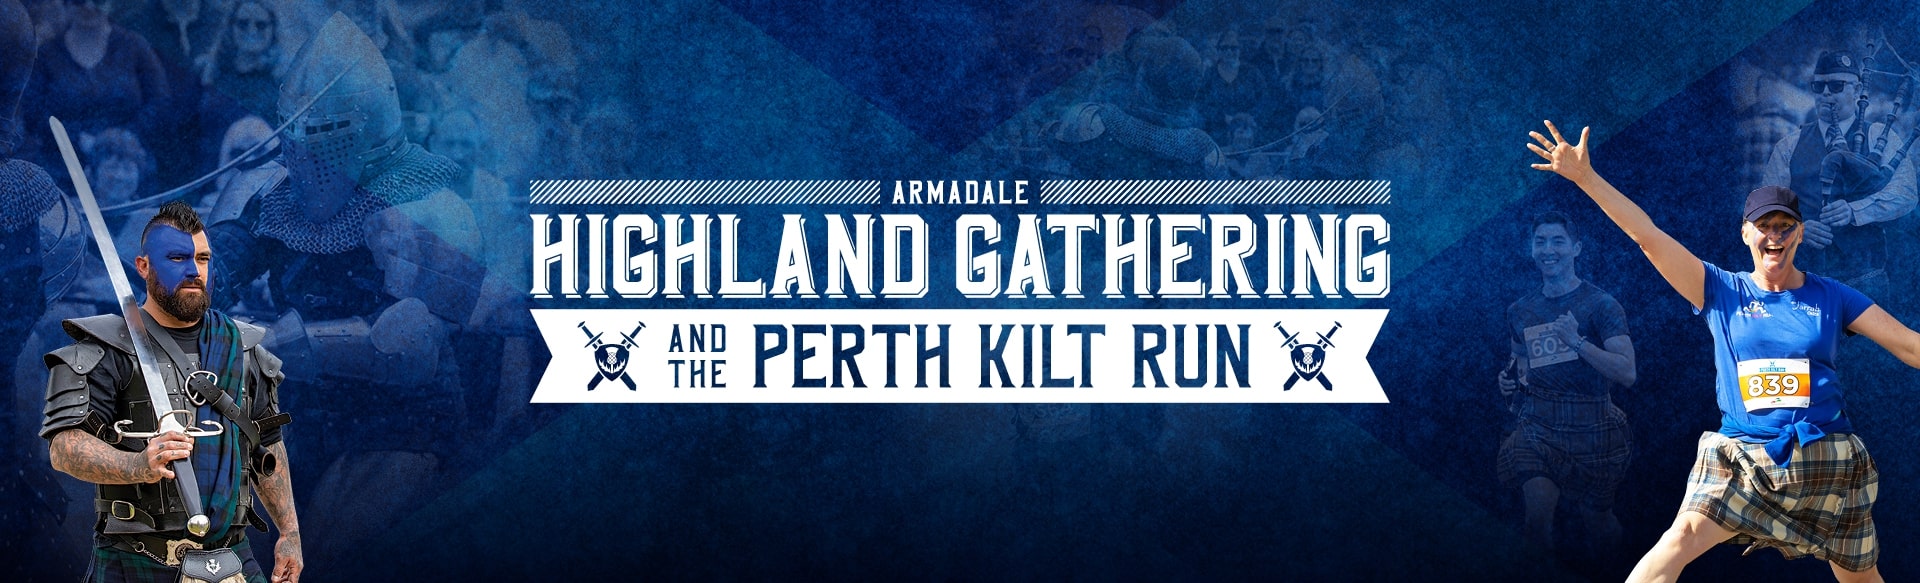 Armadale Highland Gathering and the Perth Kilt Run